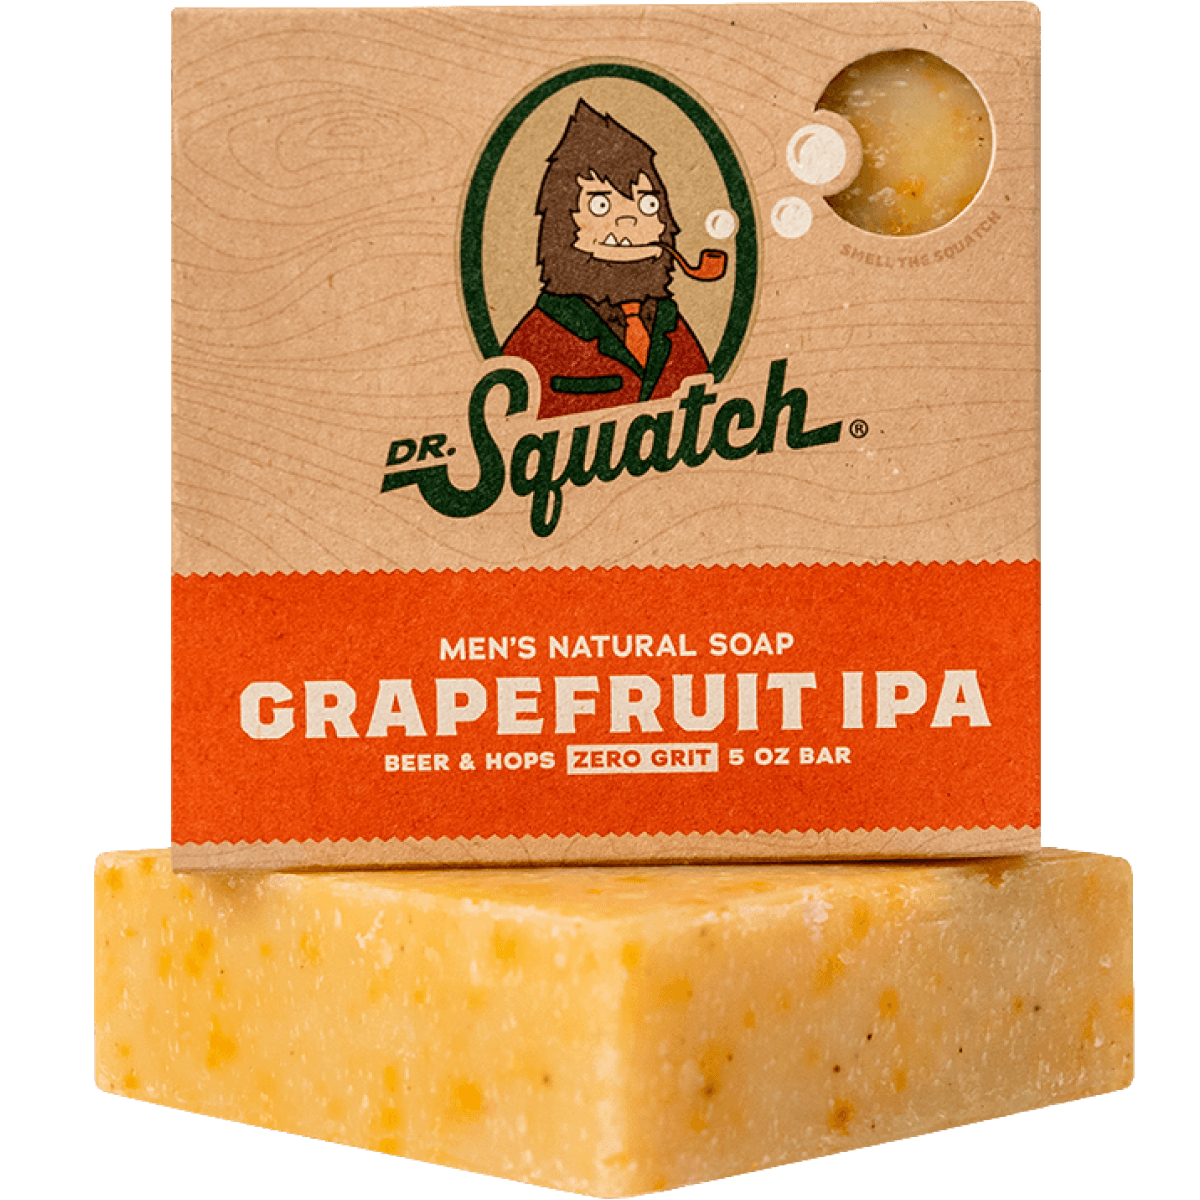 Dr. Squatch Men's Natural Soap Grapefruit IPA 5oz Bar